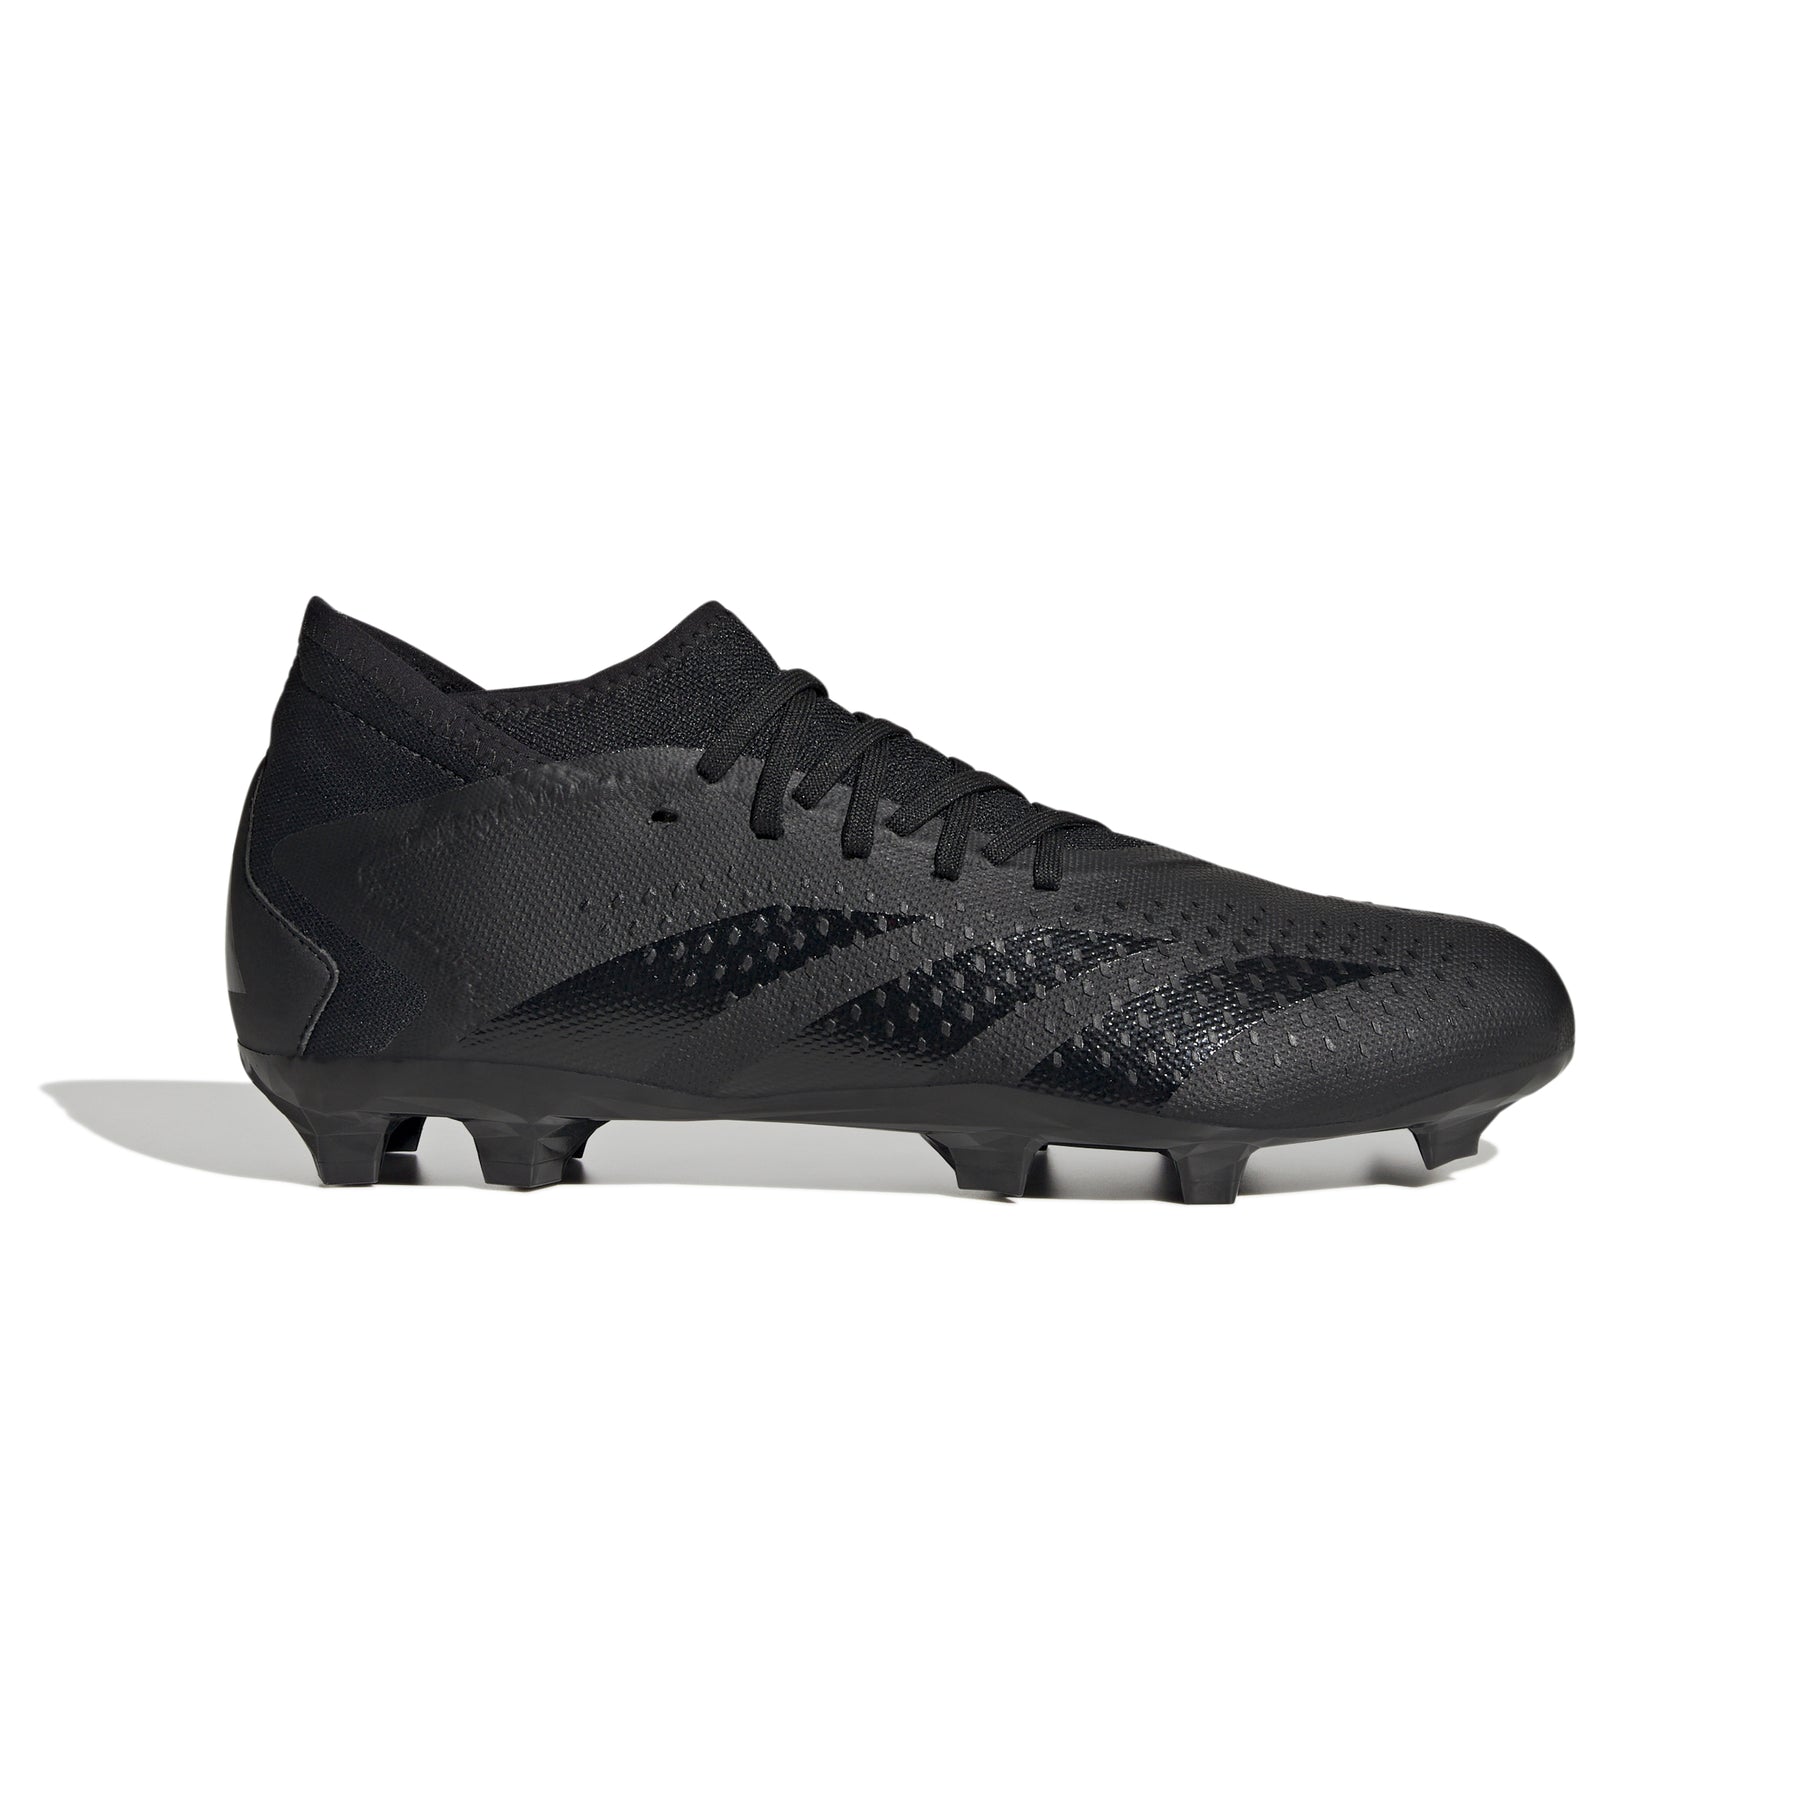 Predator Football Boots  Shop adidas Predator Football Shoes Online